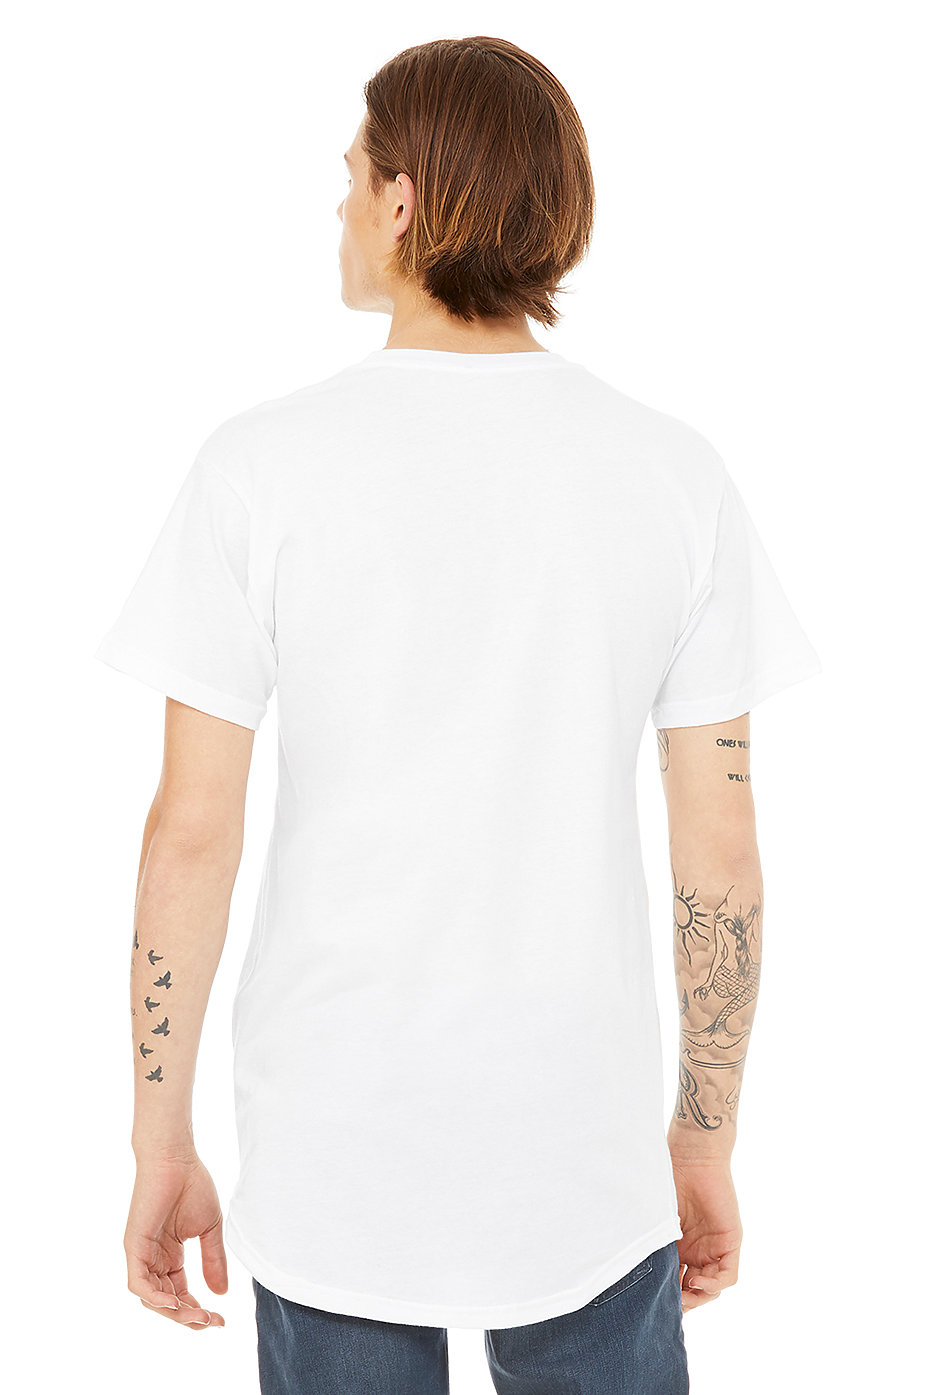 Hmarkt Mens Skinny Tee Letters Slim Fit Casual T-Shirt Short Sleeve T-Shirt